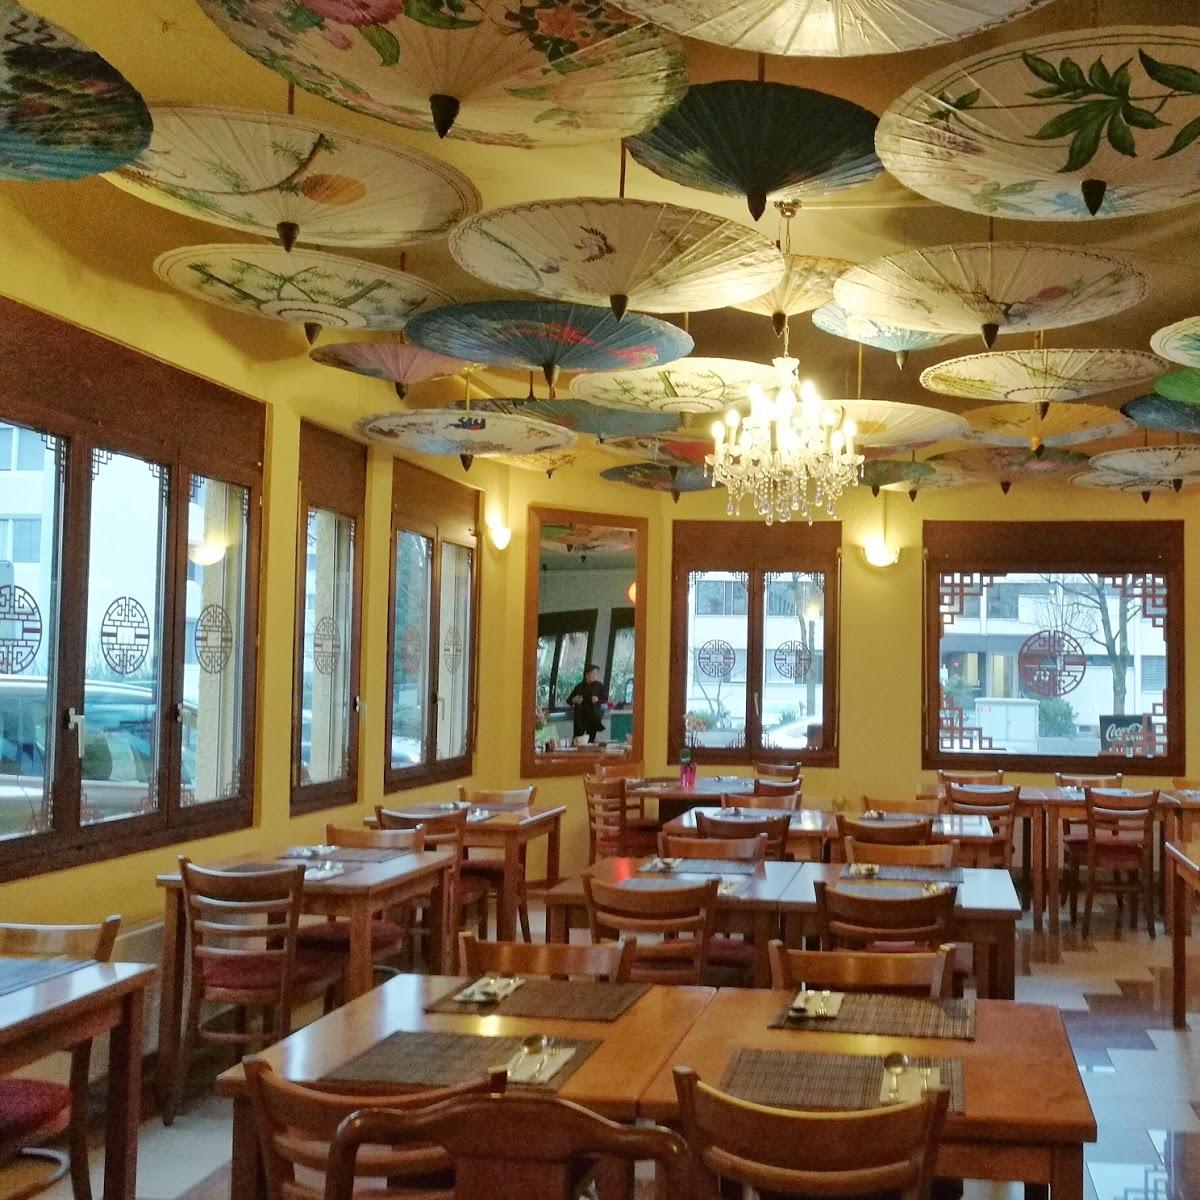 Restaurant "Golden Dragon Bistro & Take Away" in Baar